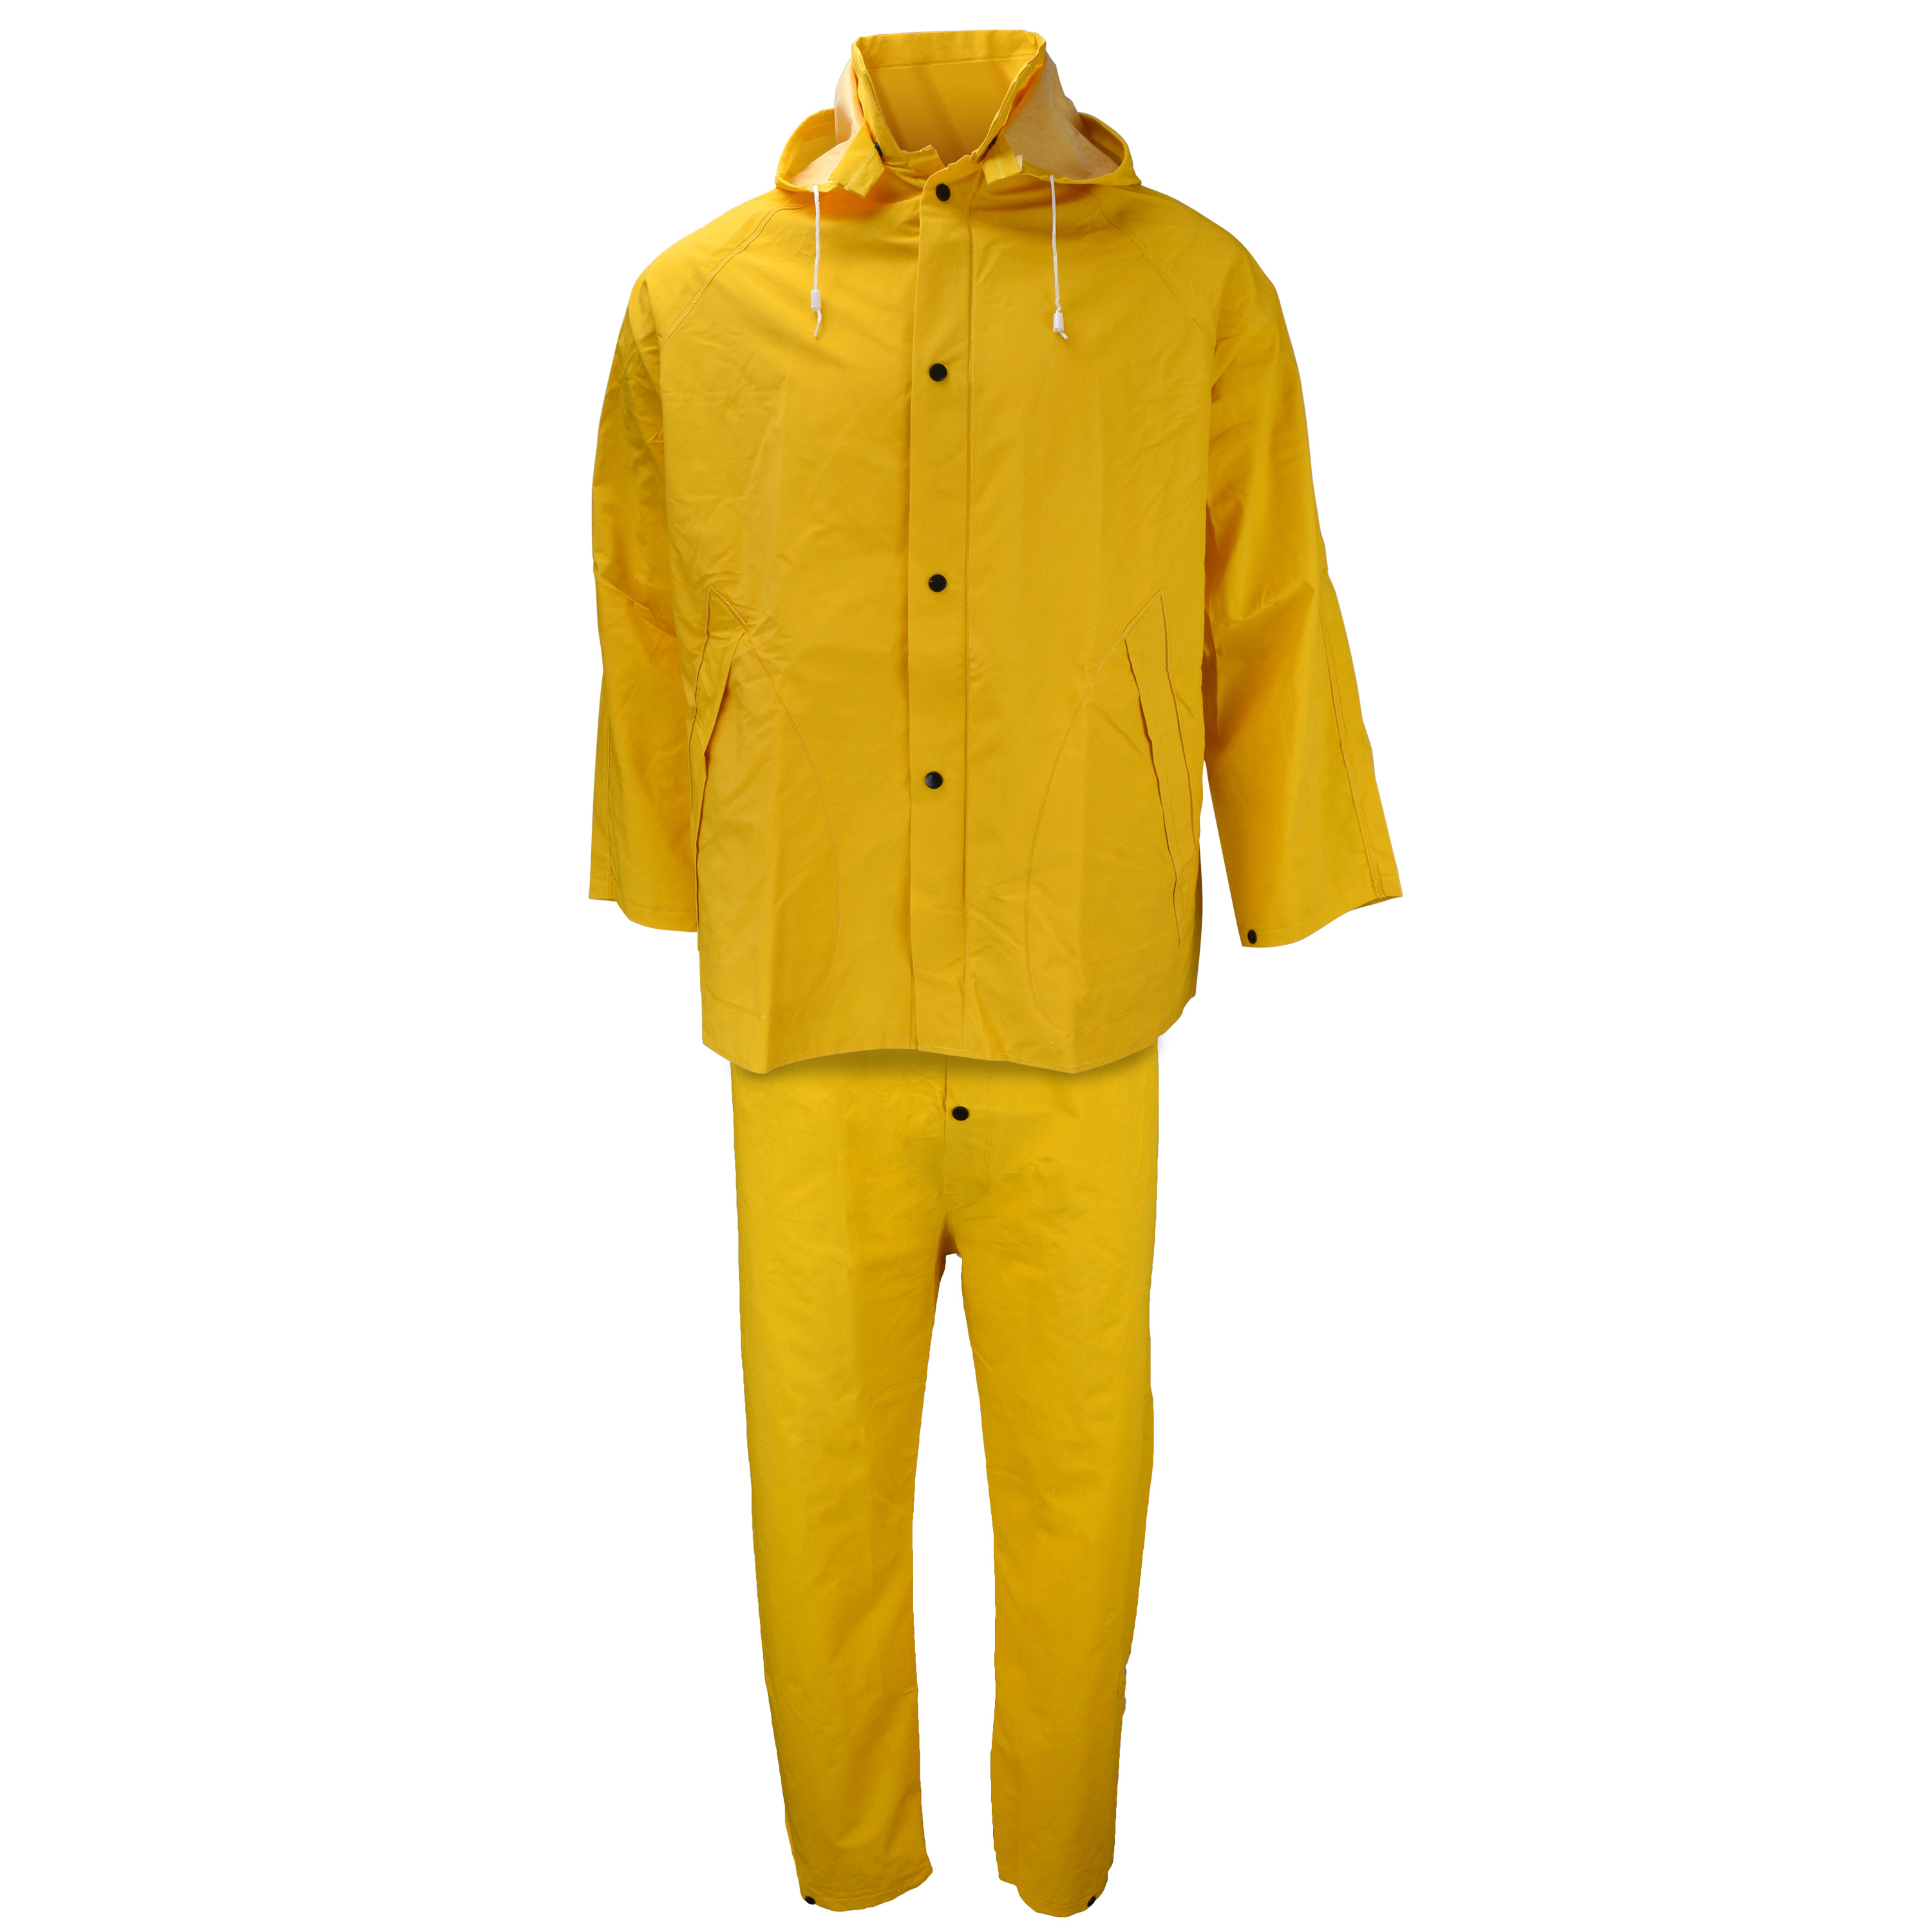 Economy Rain Suit - Safety Yellow - Size 5X